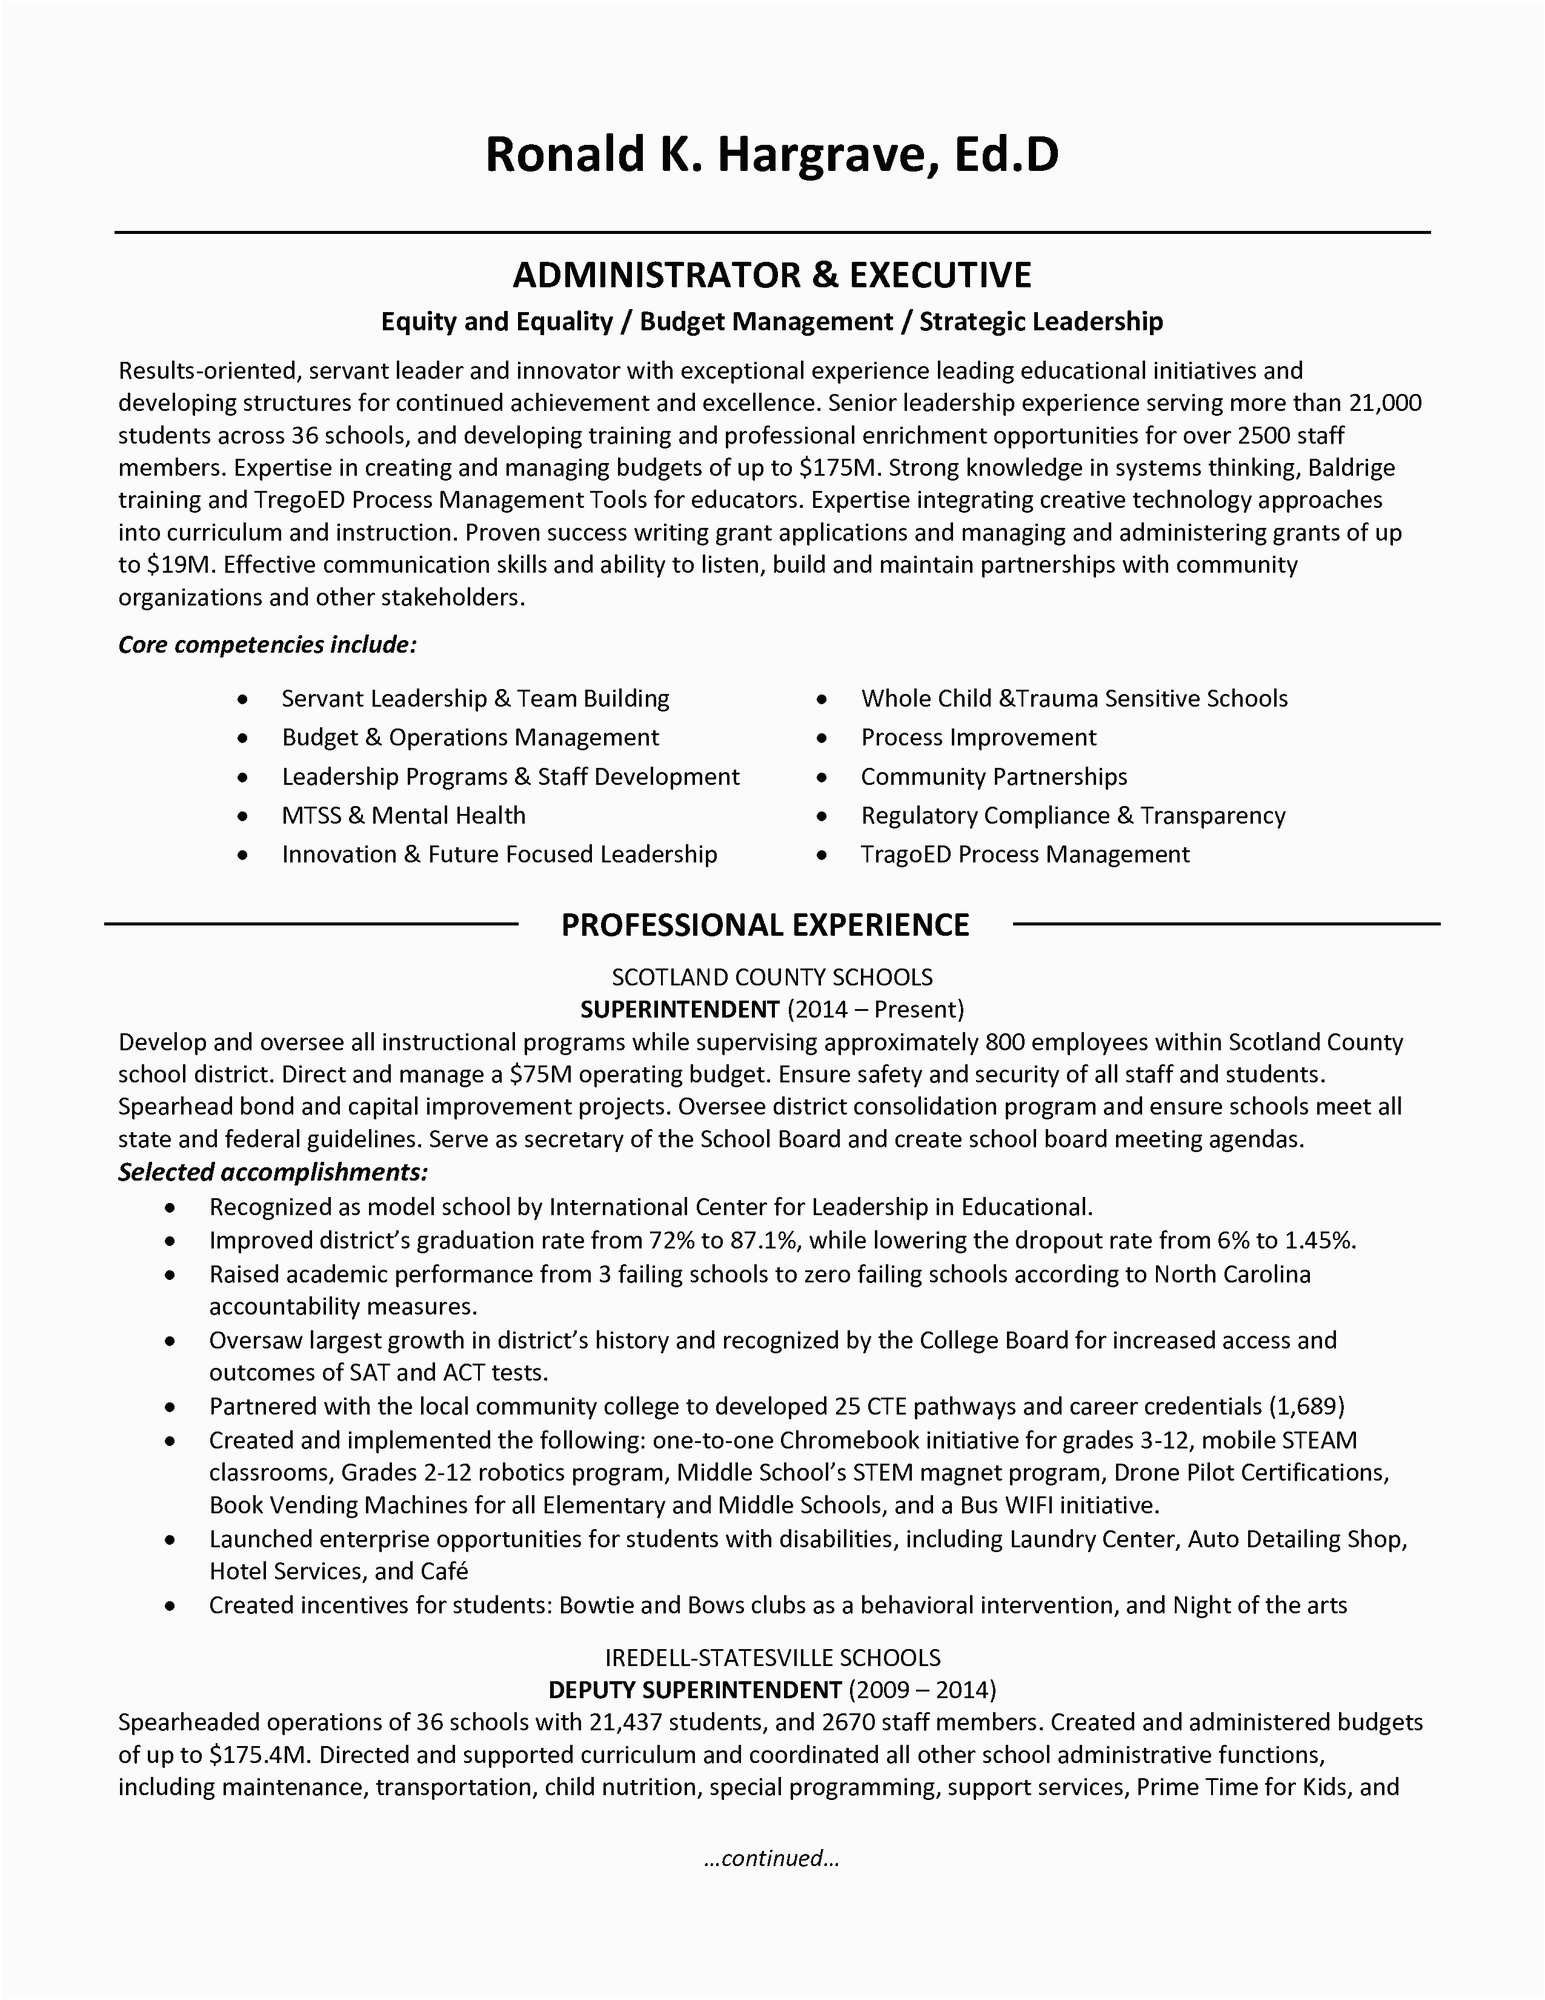 Sample Resume for School Superintendent Position Superintendent Resume Example – Salescvfo